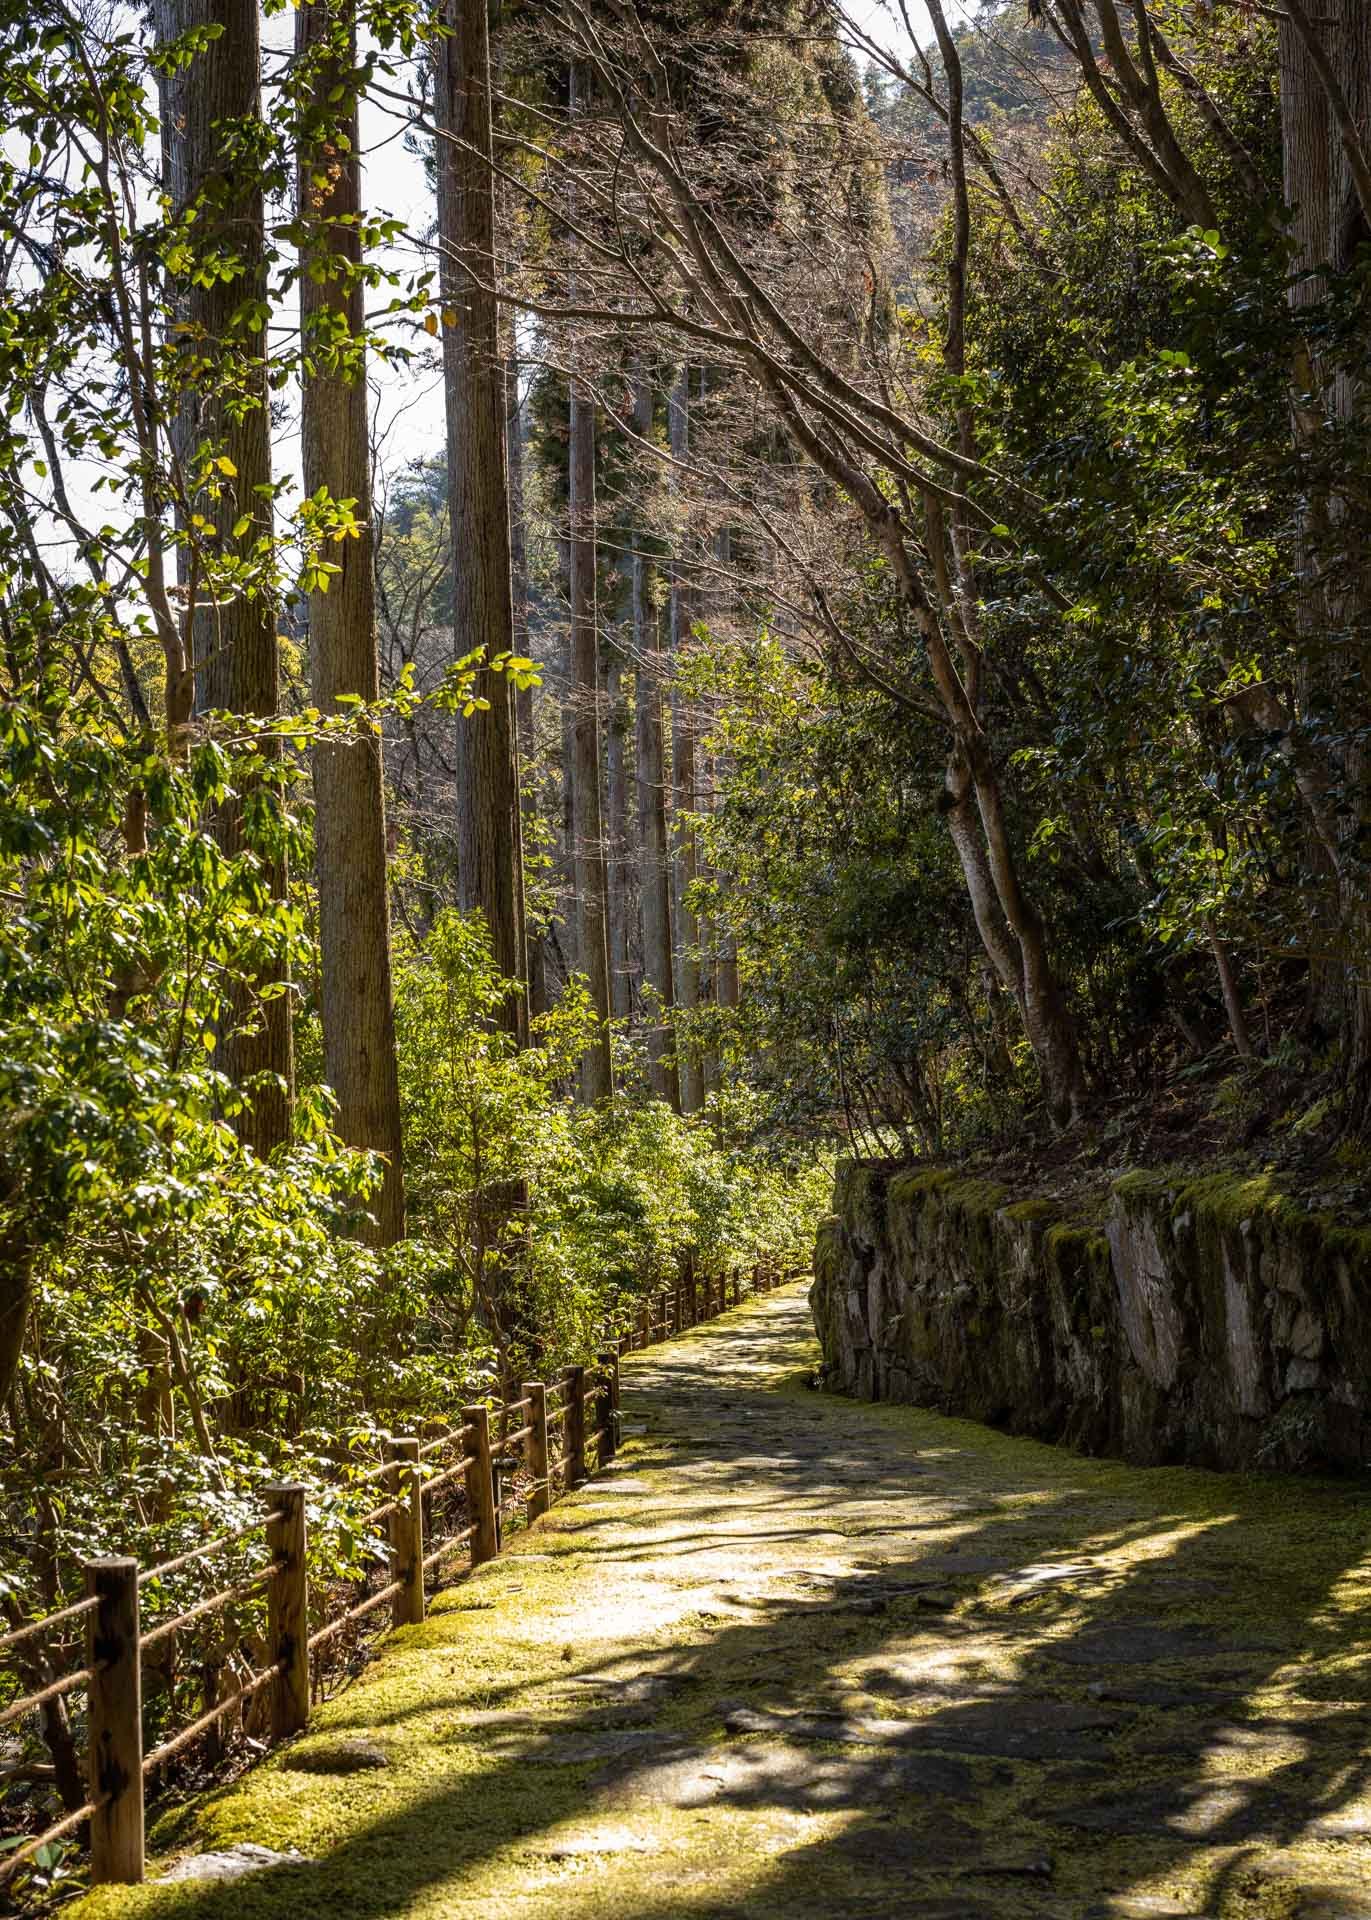 Walking through the garden at Aman Kyoto. 